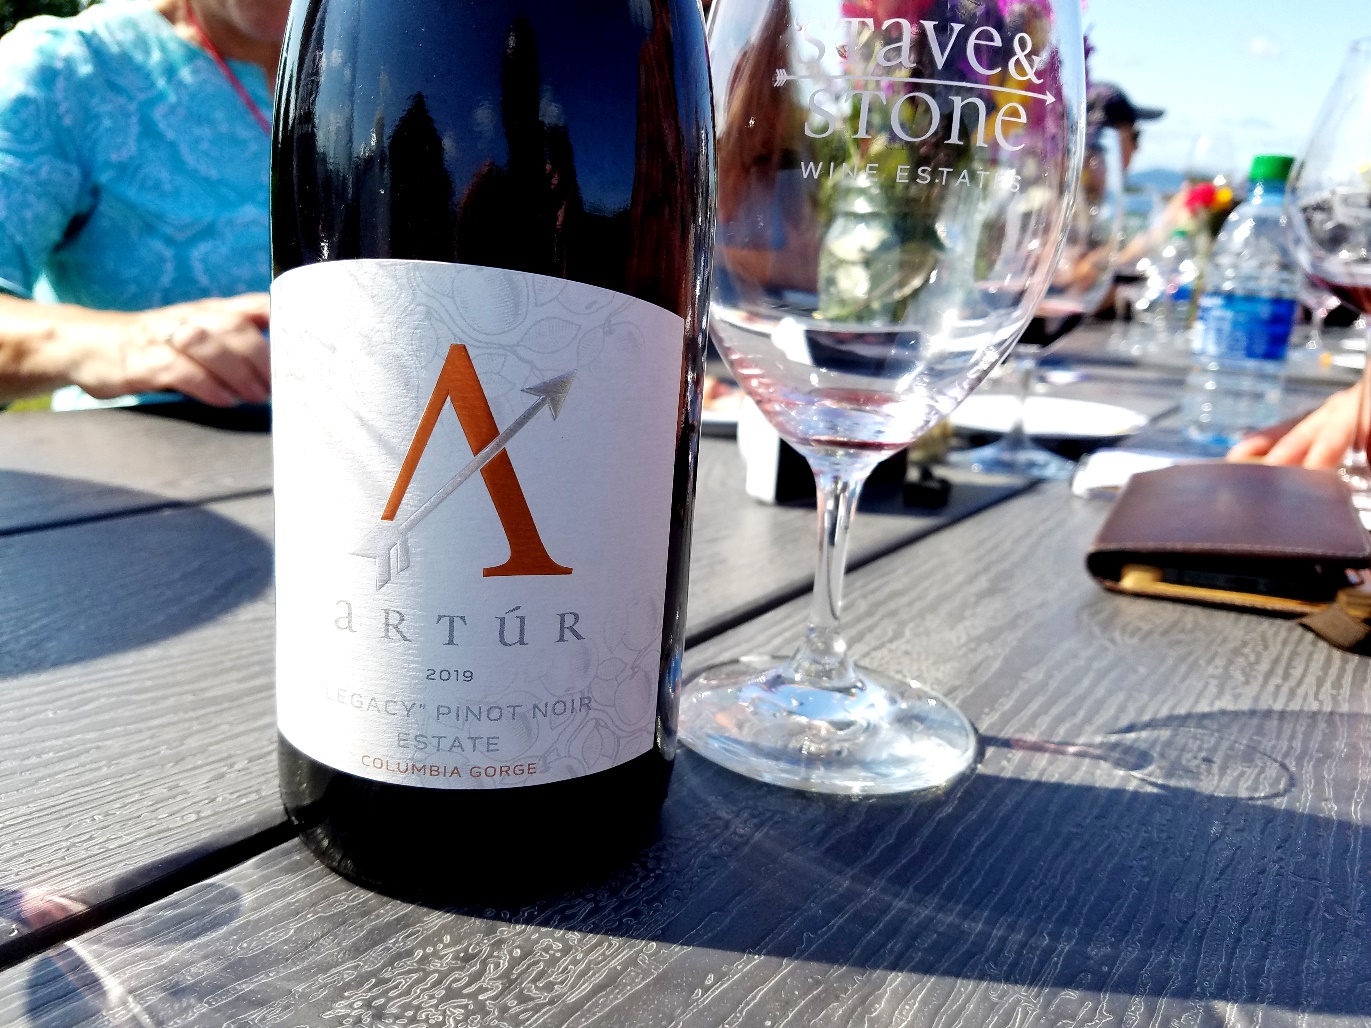 Stave & Stone Wine Estates, Artúr Legacy Estate Pinot Noir 2018, Columbia Gorge, Oregon, Wine Casual